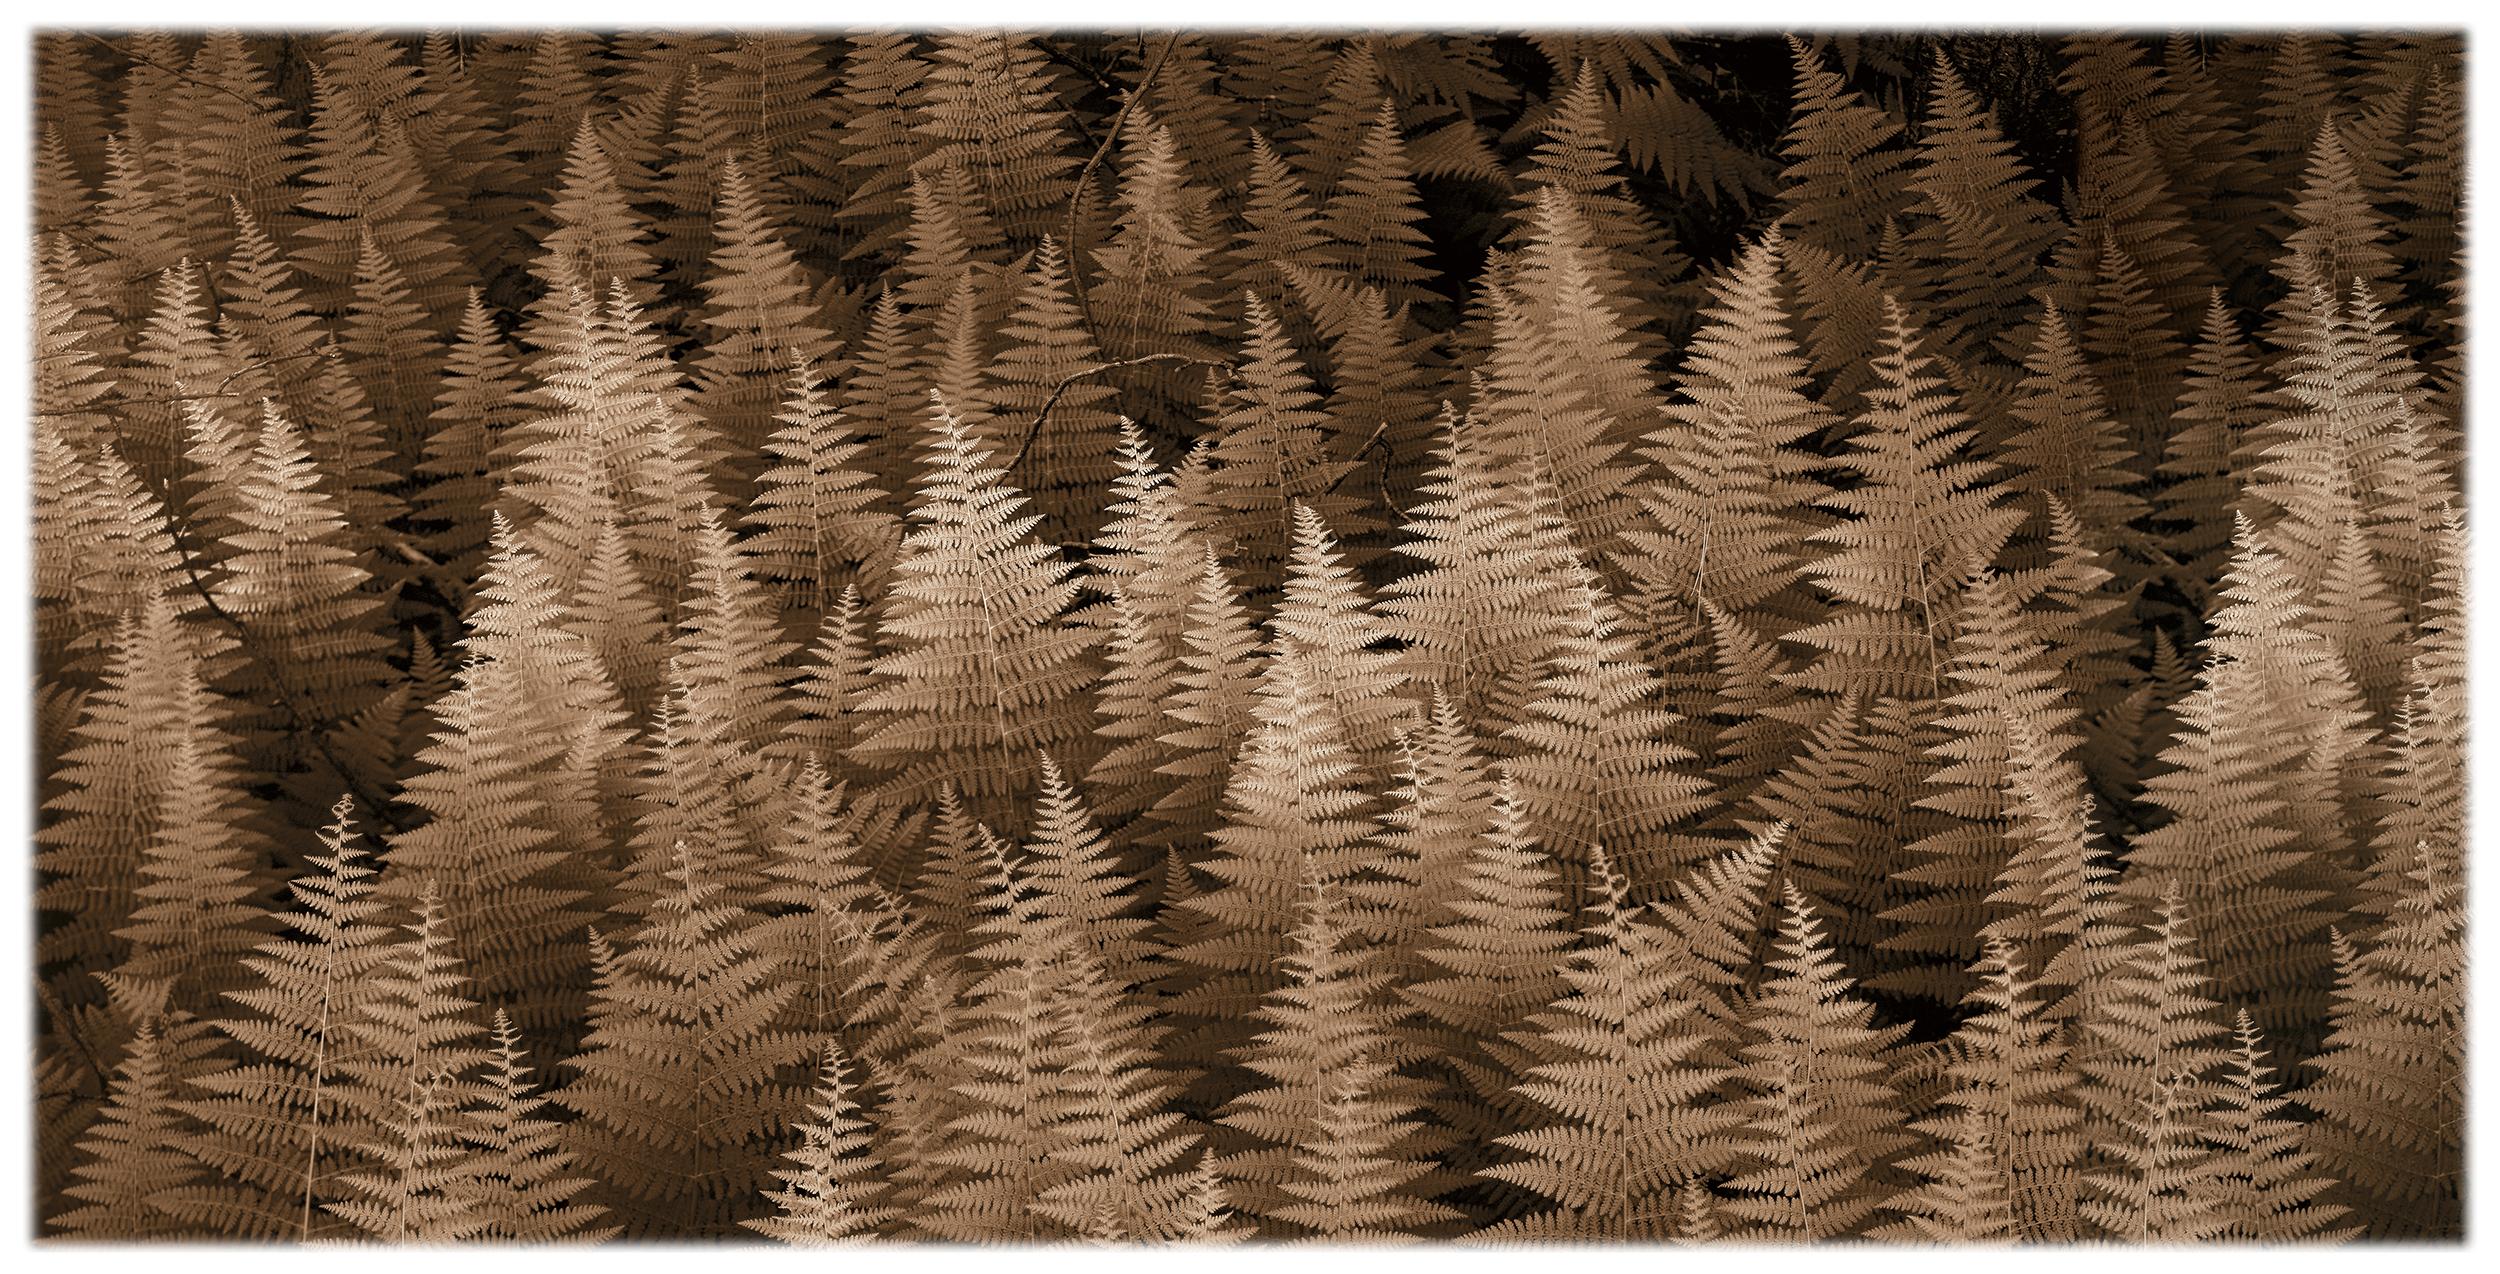 James Bleecker Still-Life Photograph – Ferns Nr. 2 (Sepiafarbene botanische Stilllebenfotografie auf Aquarellpapier)